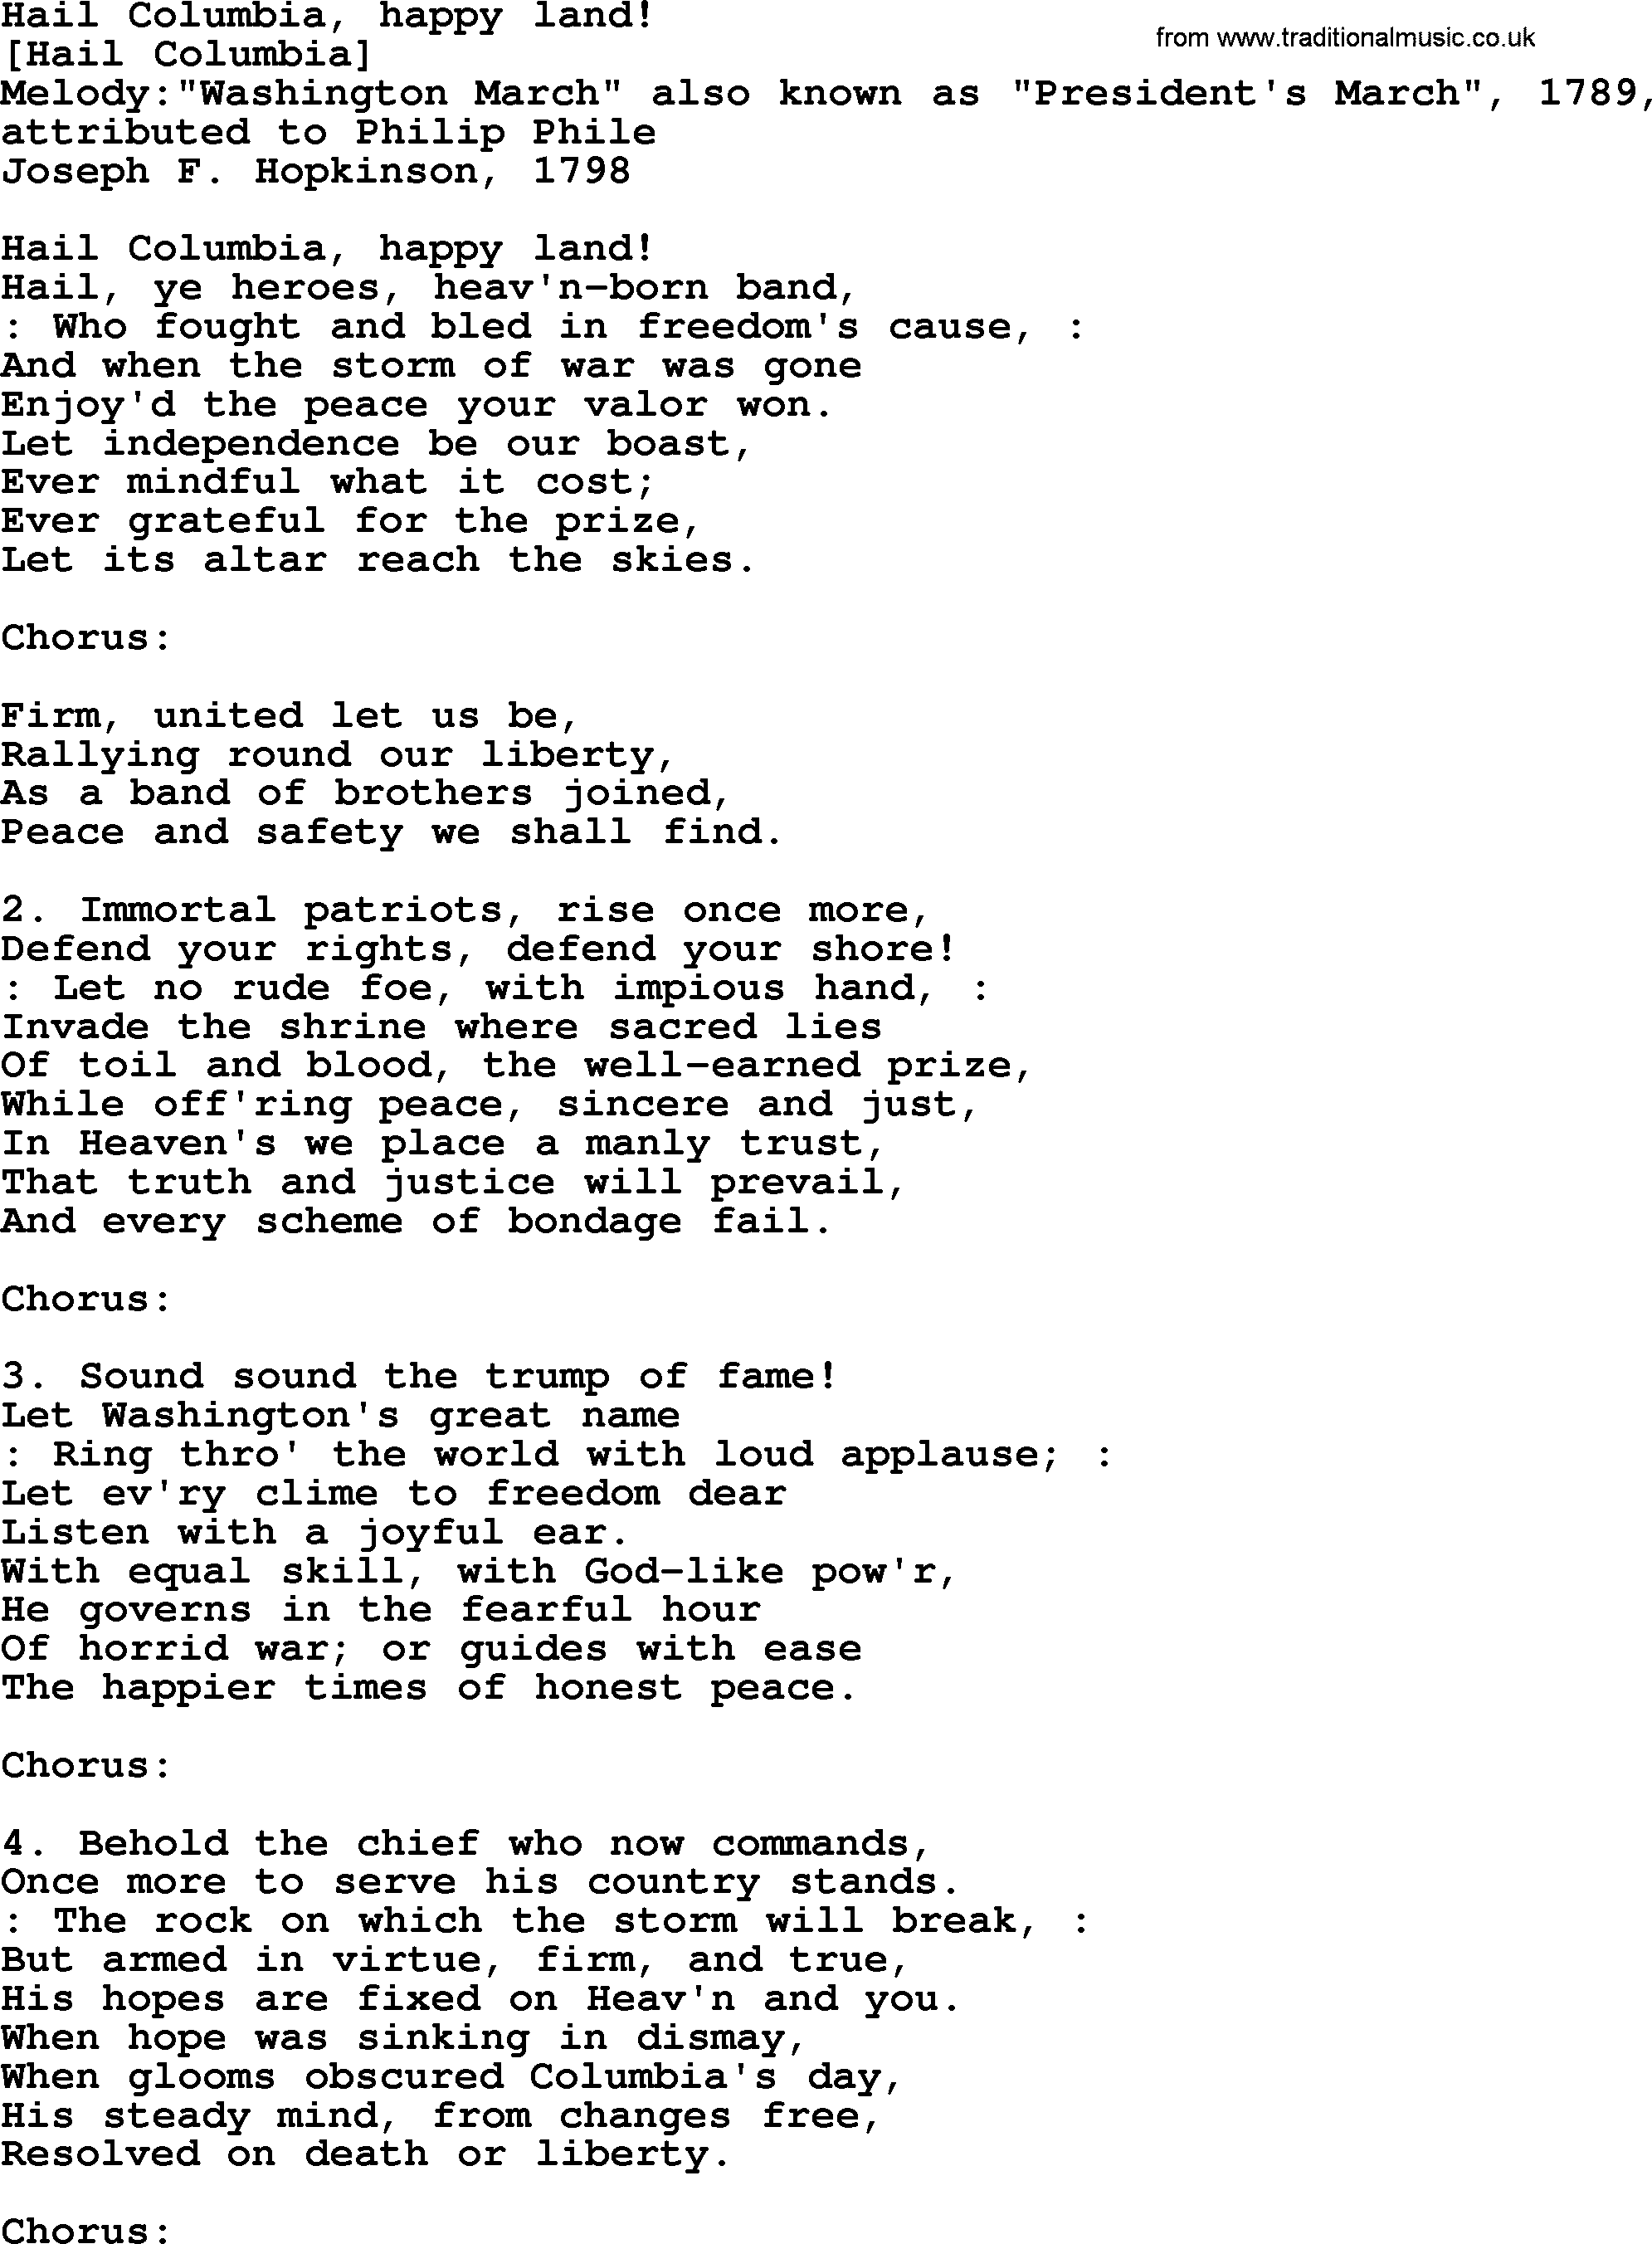 Old American Song: Hail Columbia, Happy Land!, lyrics